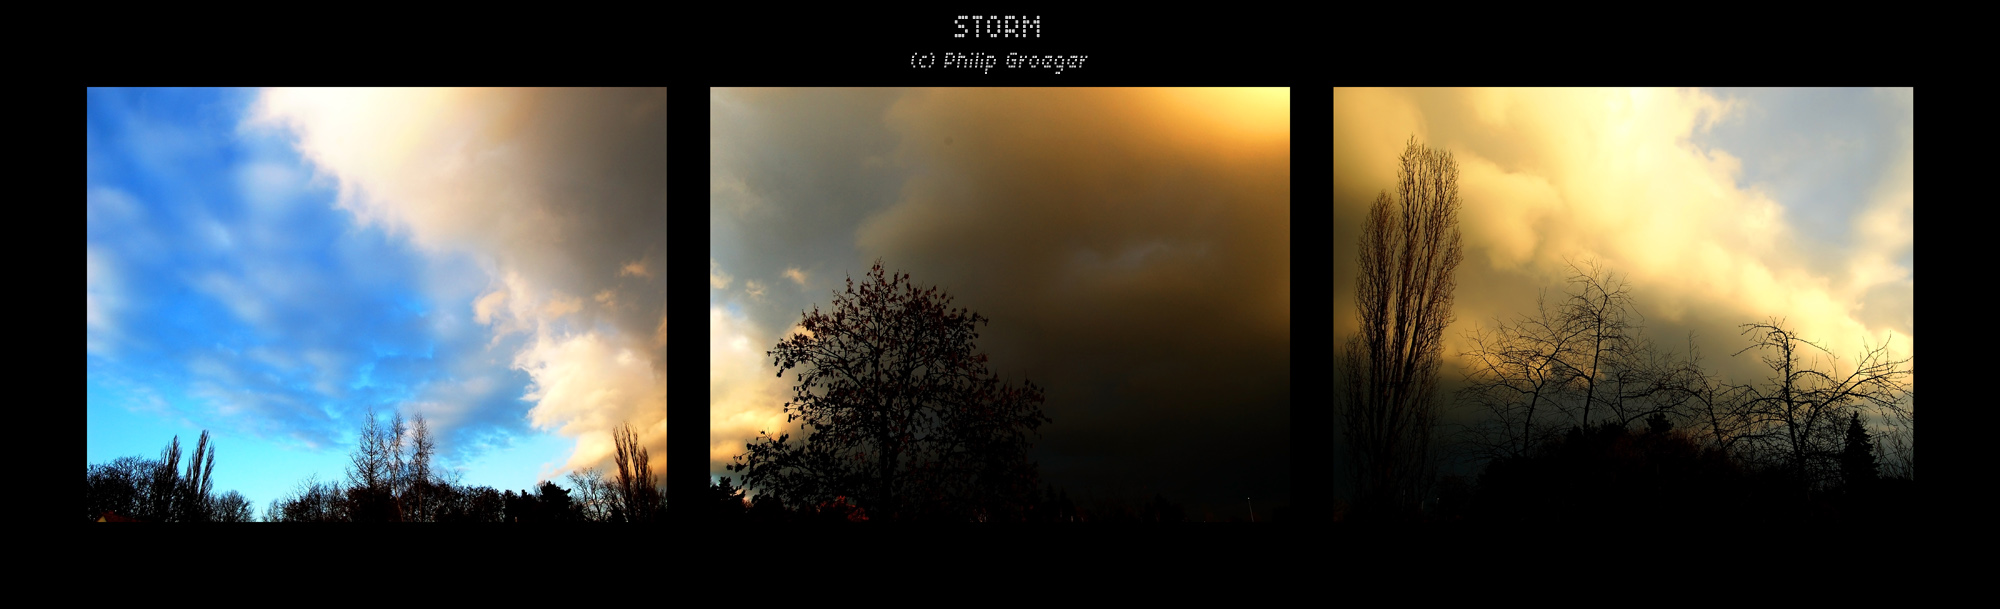 Storm - Panorama